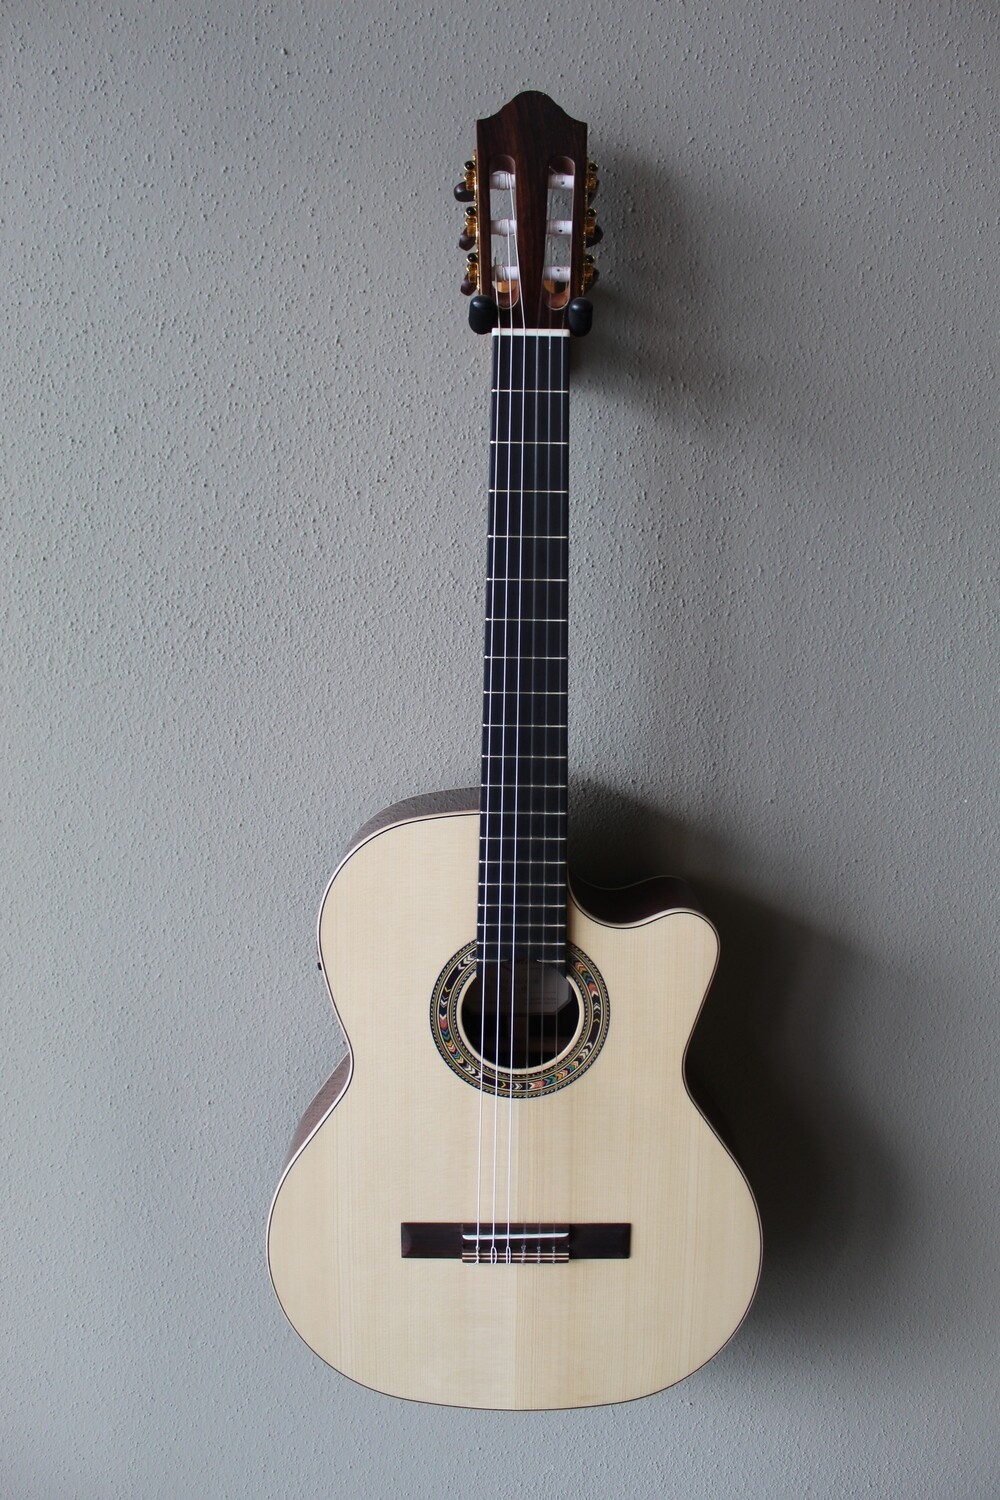 Kremona Fiesta F65CW-SB Acoustic/Electric Classical Guitar with Gig Bag